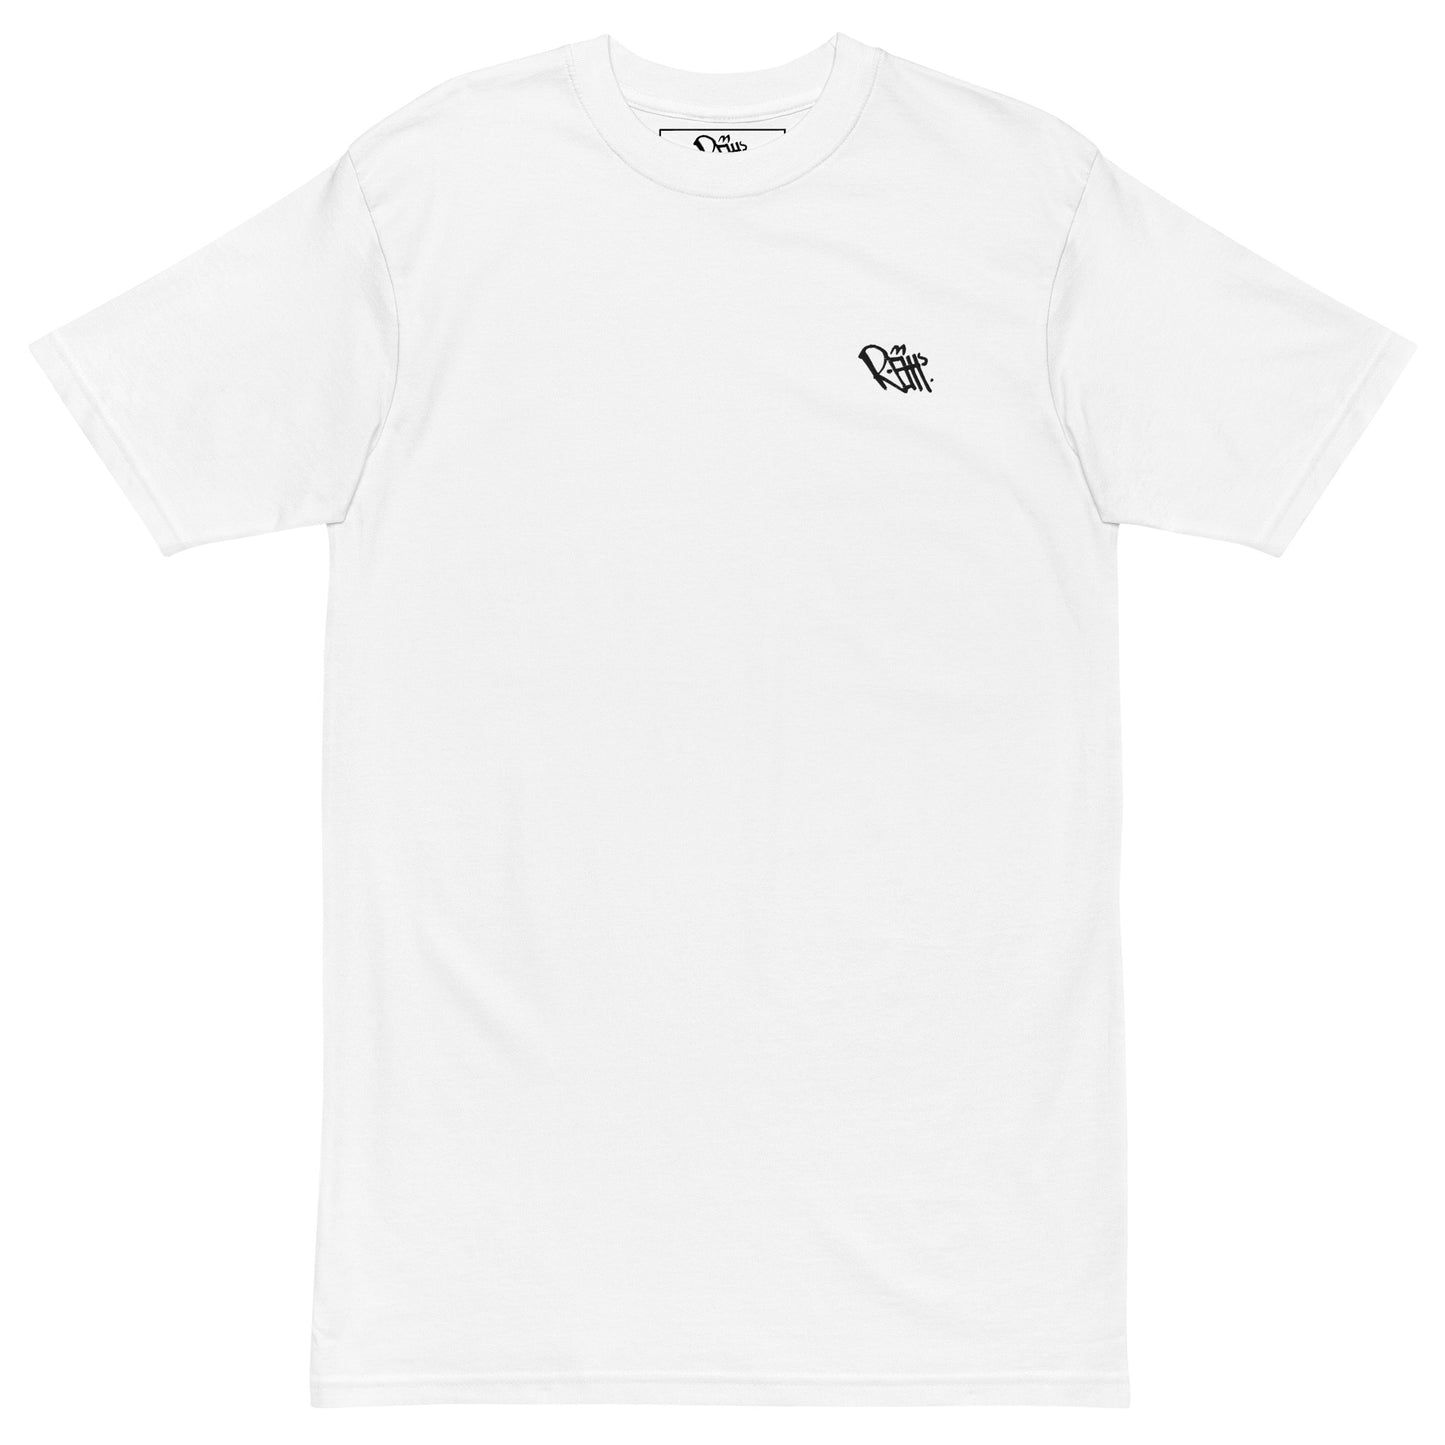 REHH Logo - Tee Shirt (White)